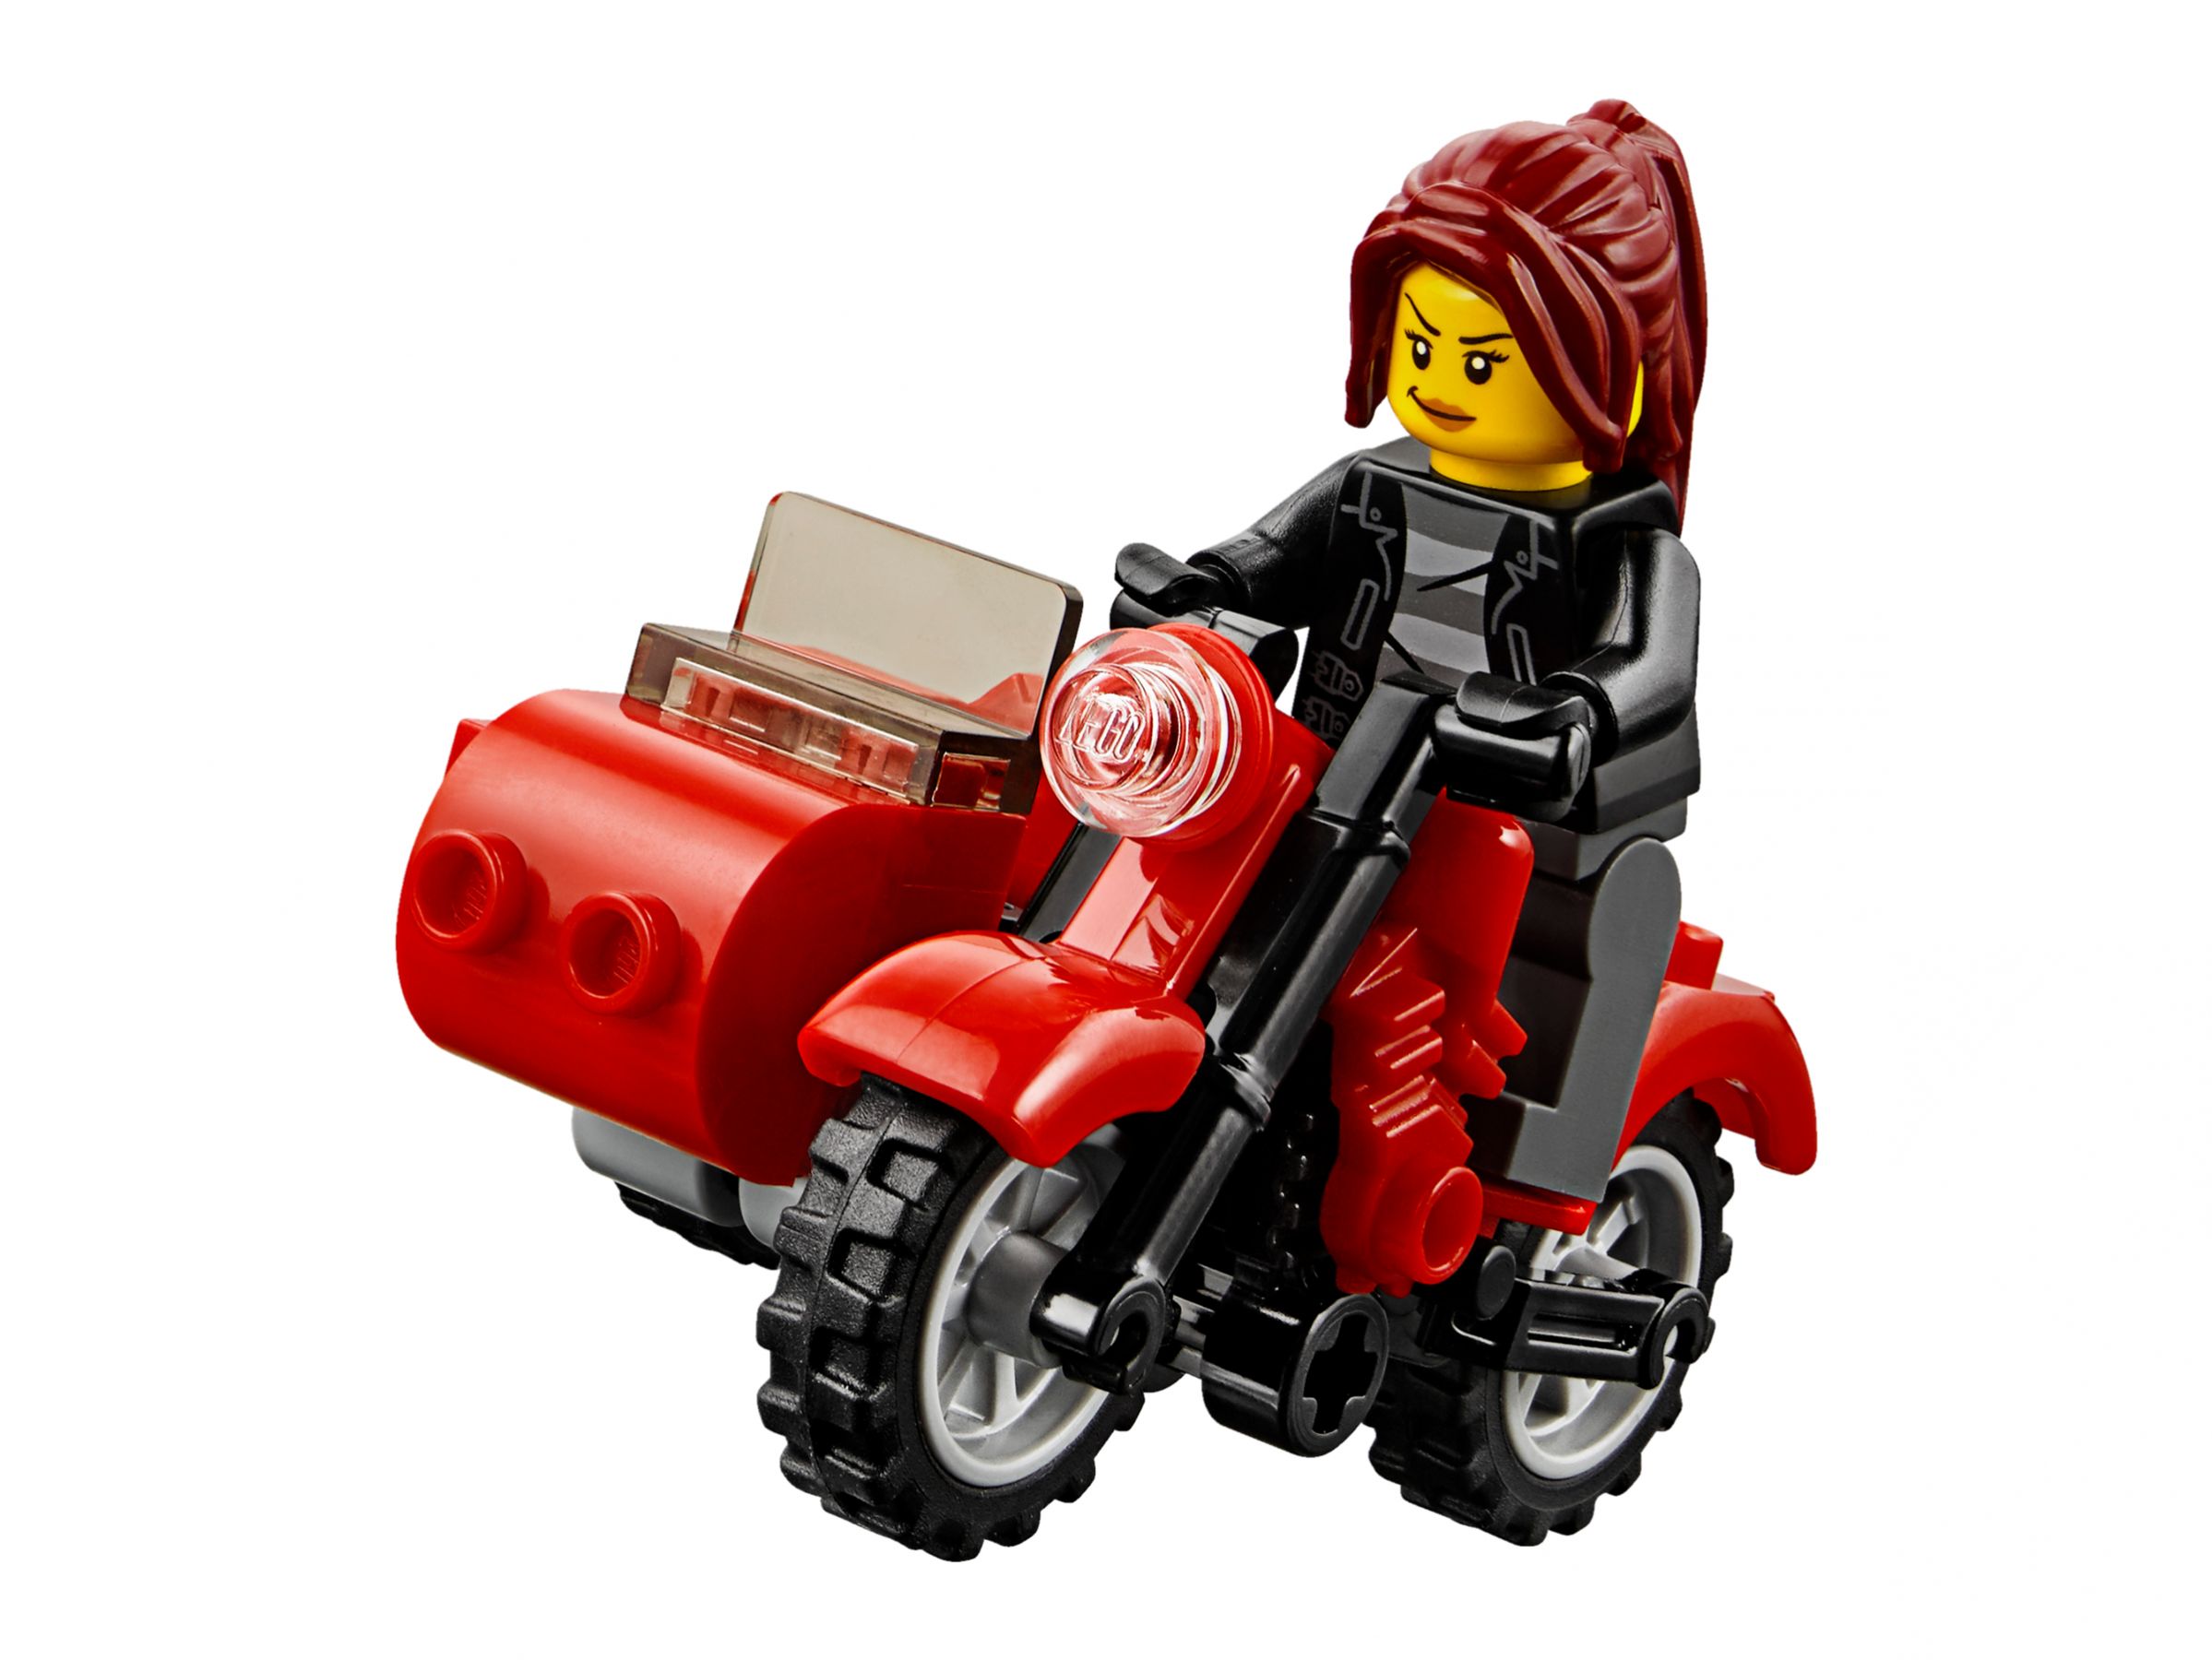 LEGO City 60143 Überfall auf Autotransporter LEGO_60143_alt4.jpg